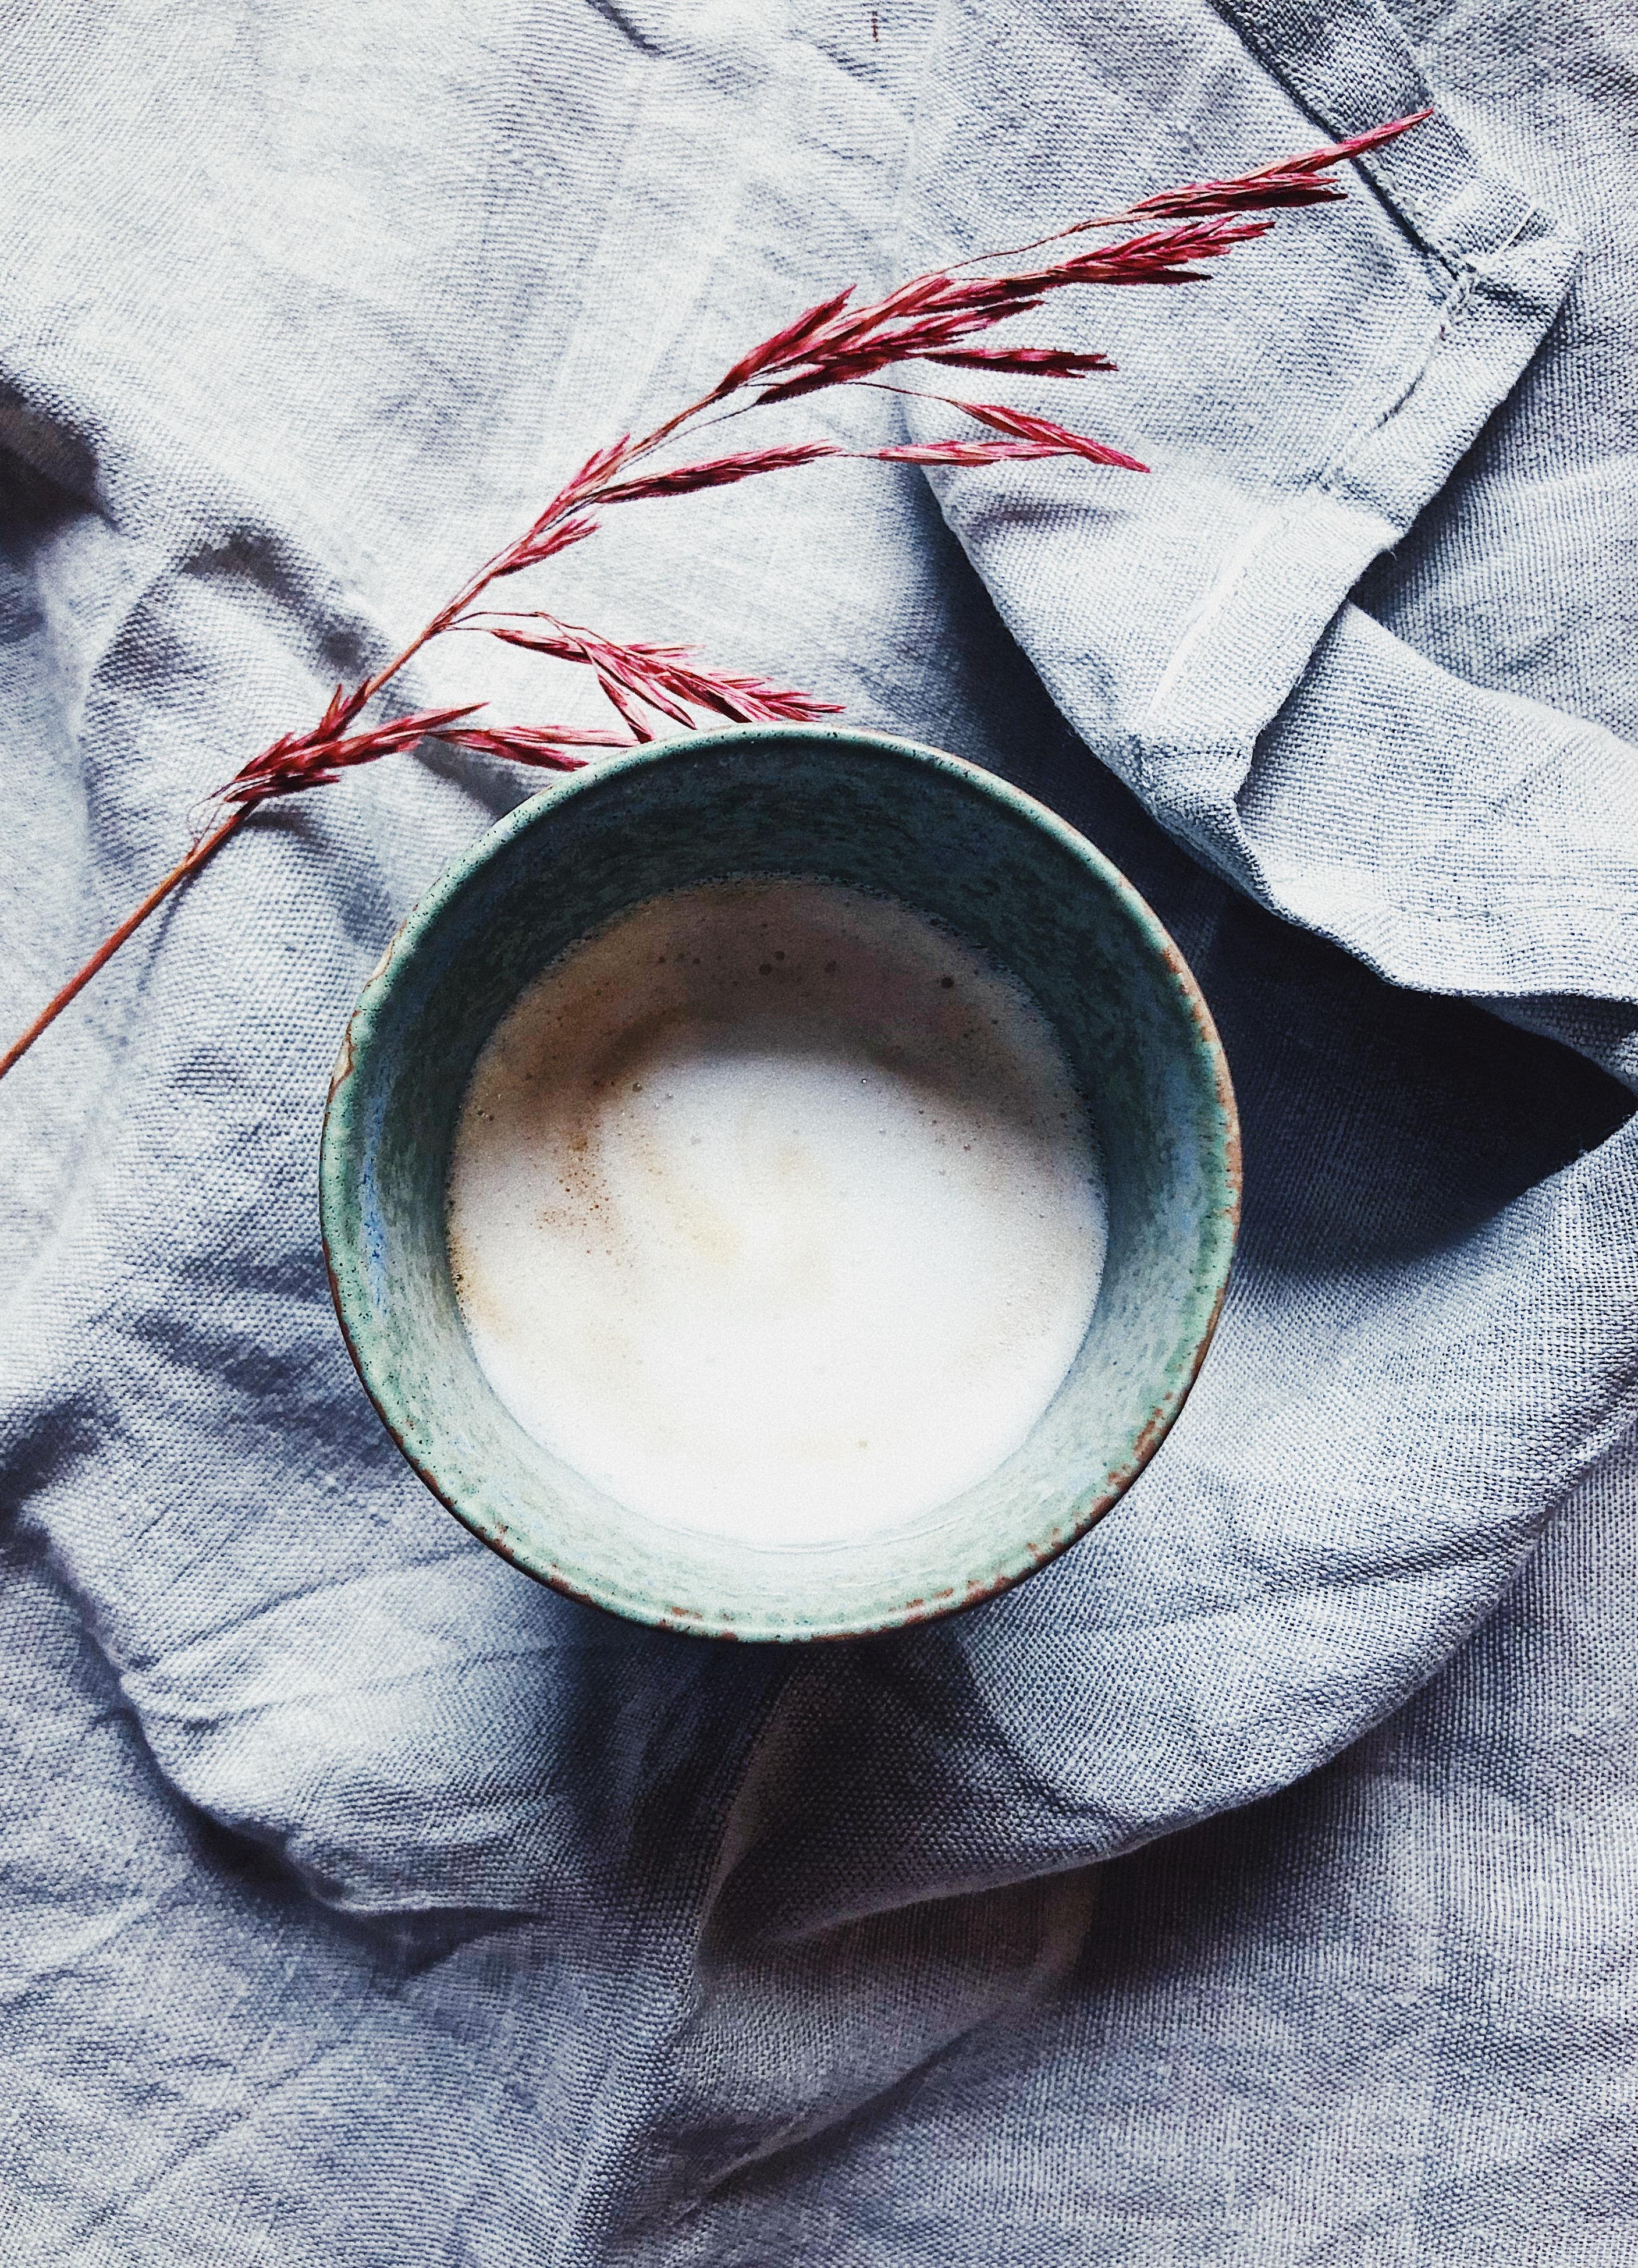 MORNINGS
#coffeelove #ceramics #linen #coffeeinbed 